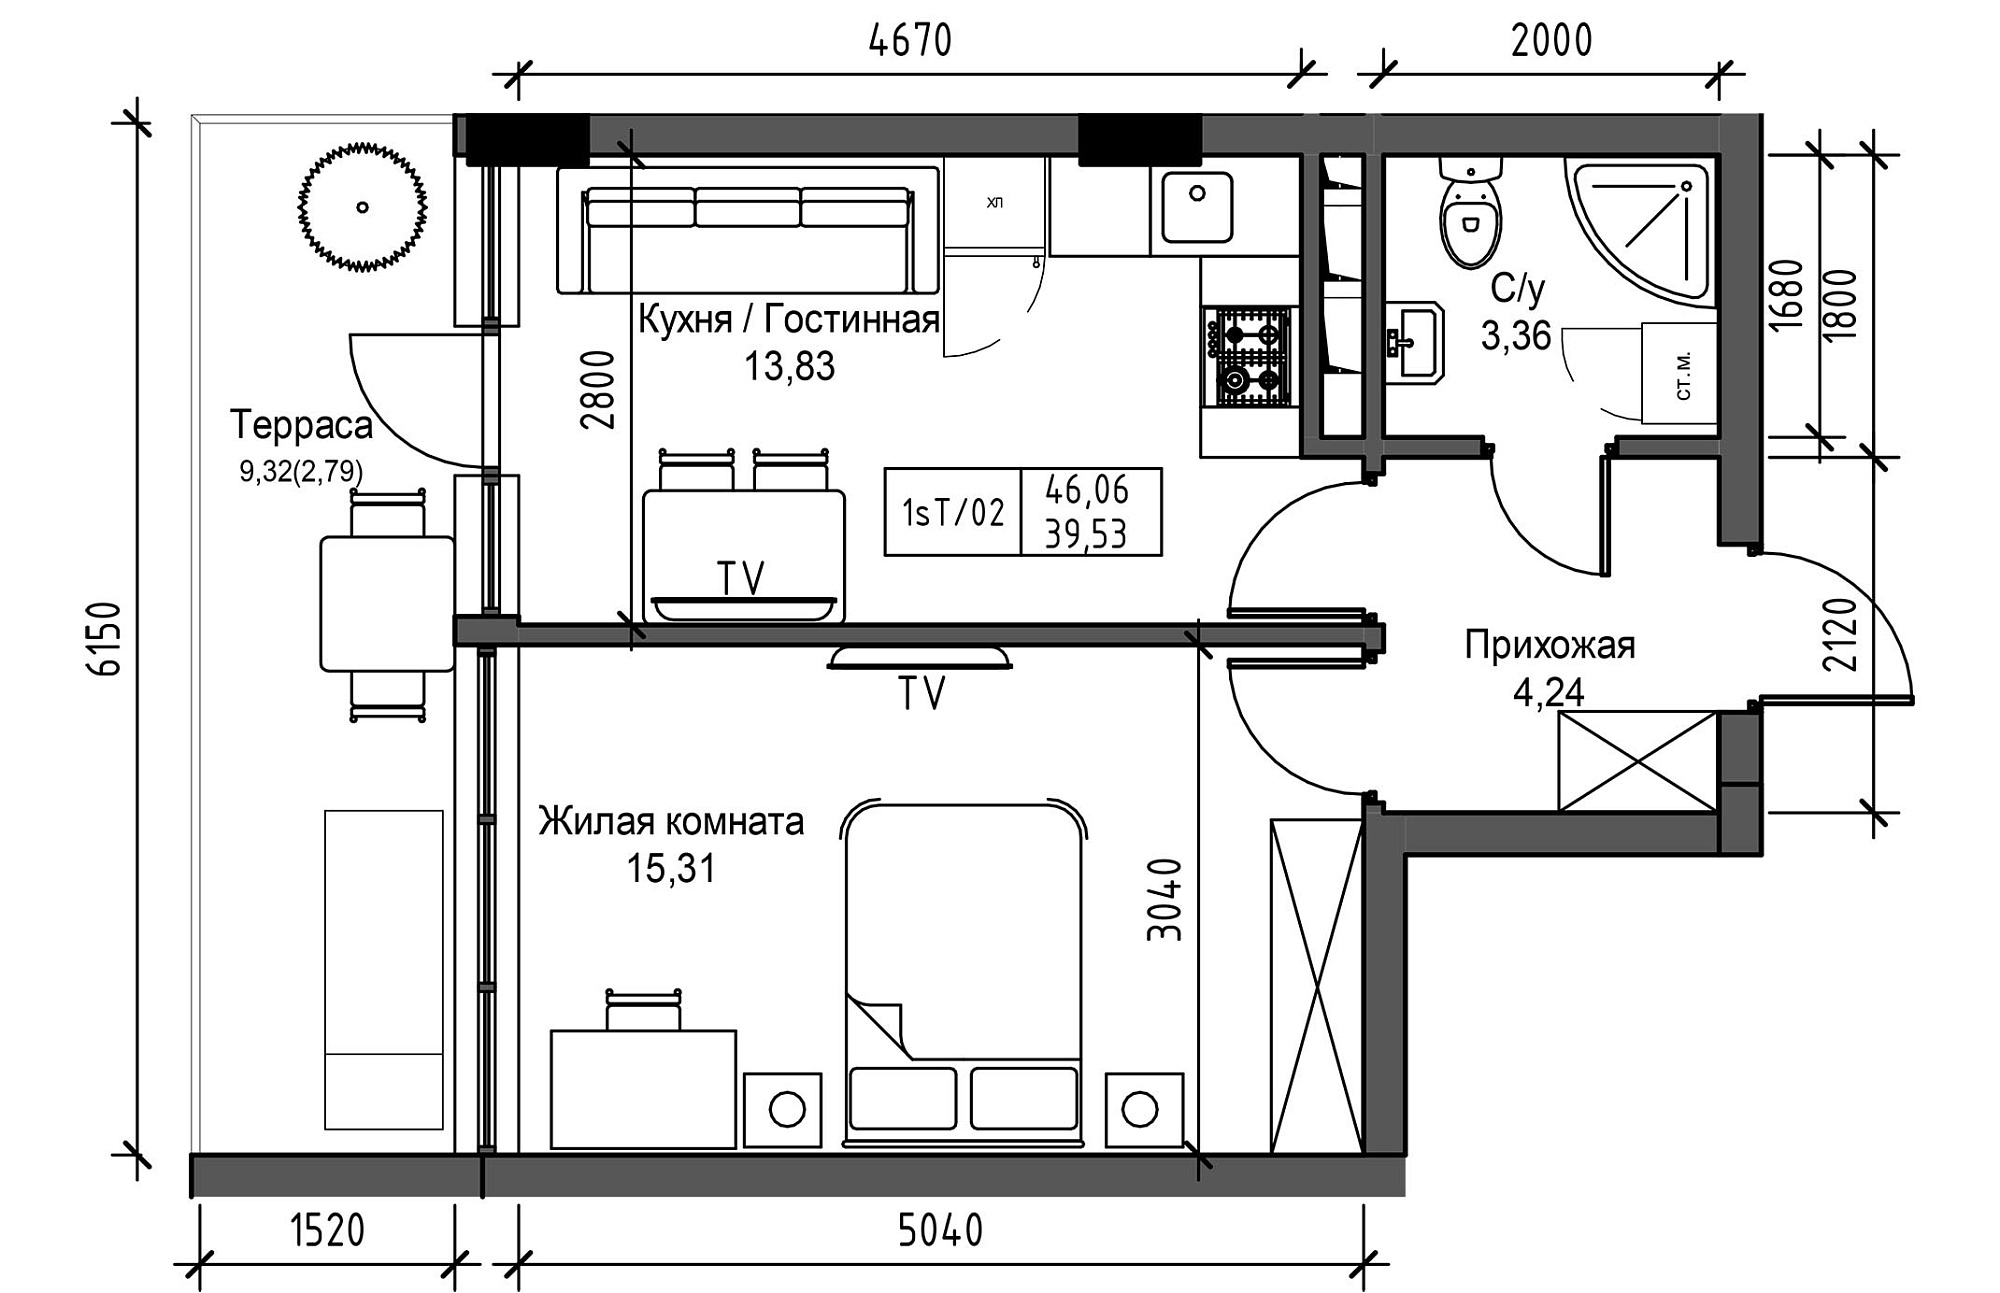 Планування 1-к квартира площею 39.53м2, UM-003-08/0087.